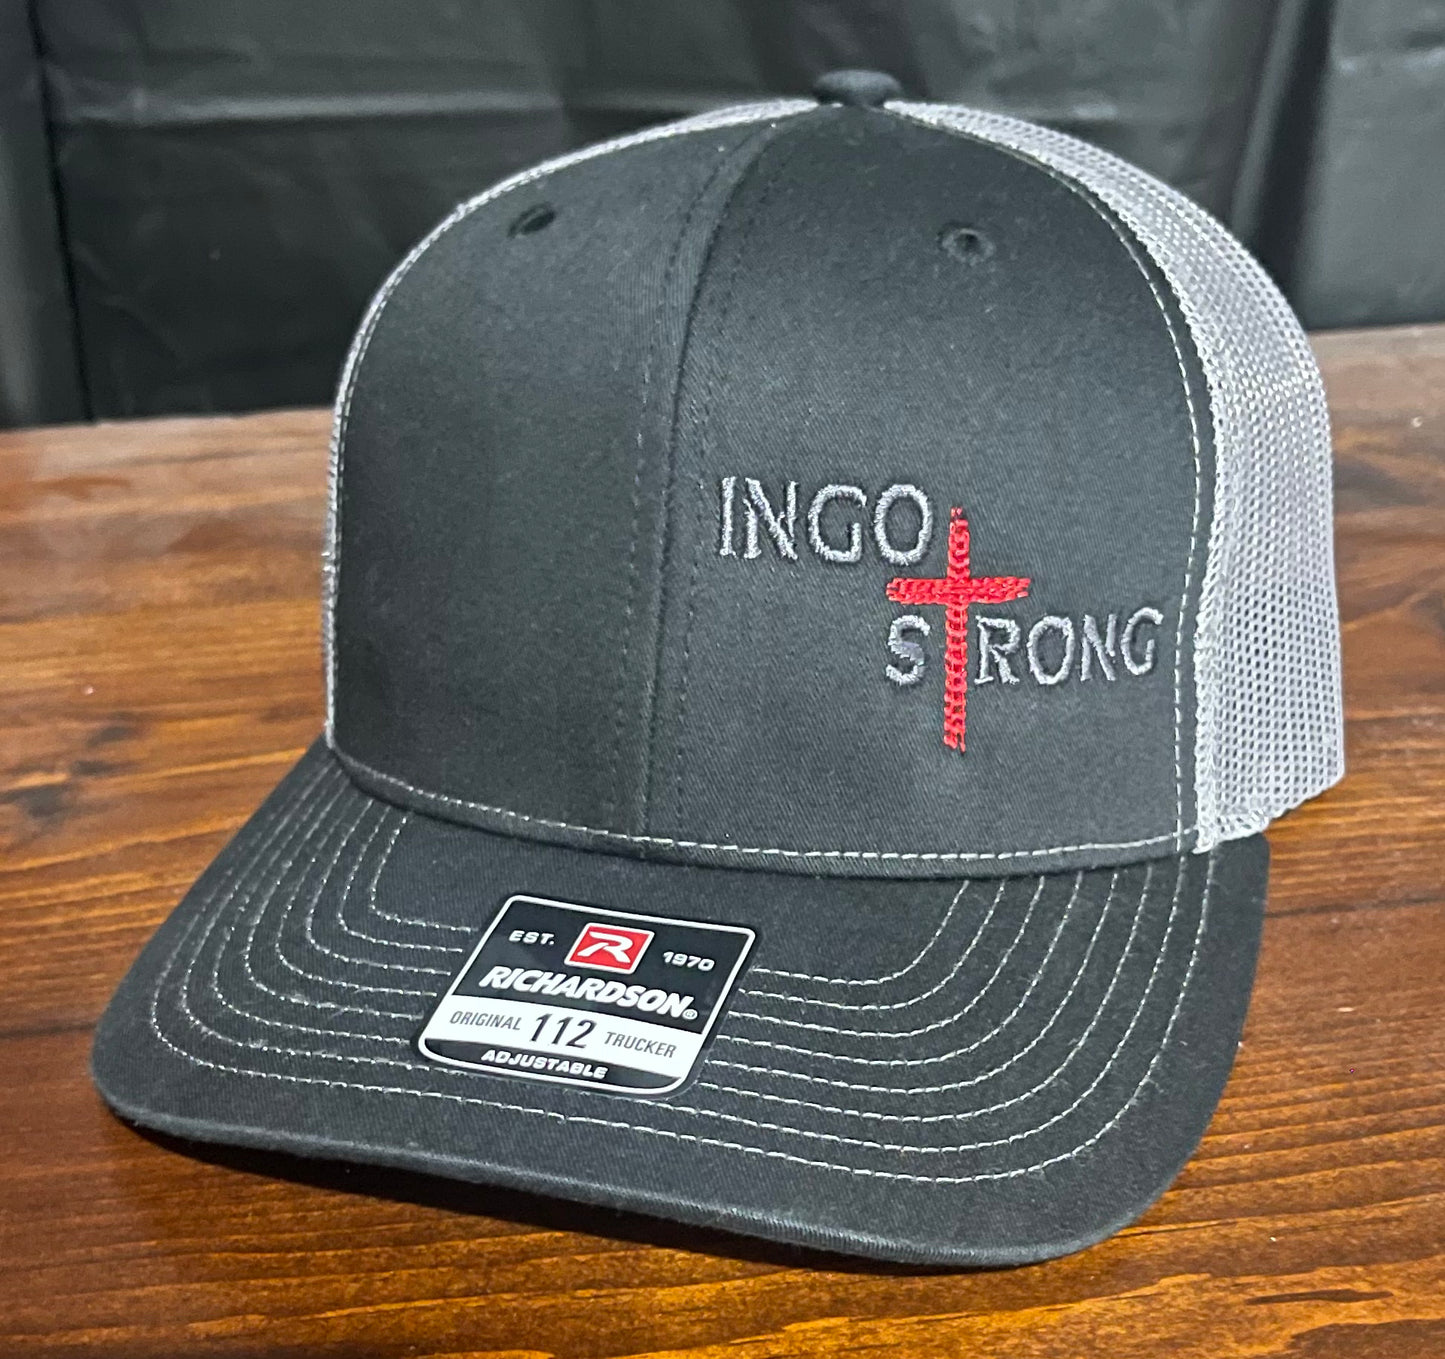 Ingo Strong Hat